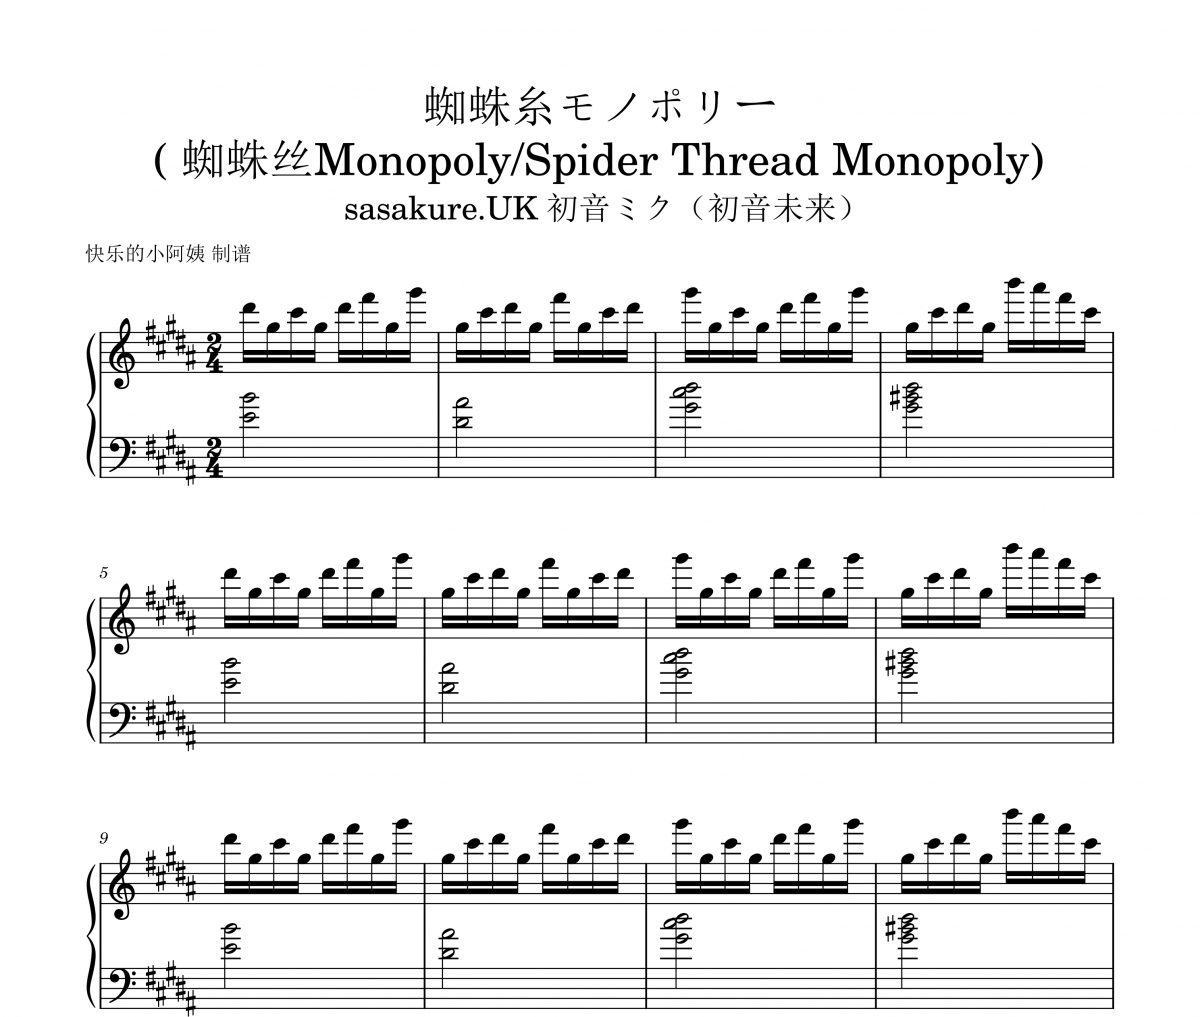 sasakure.UK 初音ミク（初音未来） 蜘蛛糸モノポリー( 蜘蛛丝Monopoly/Spider Thread M